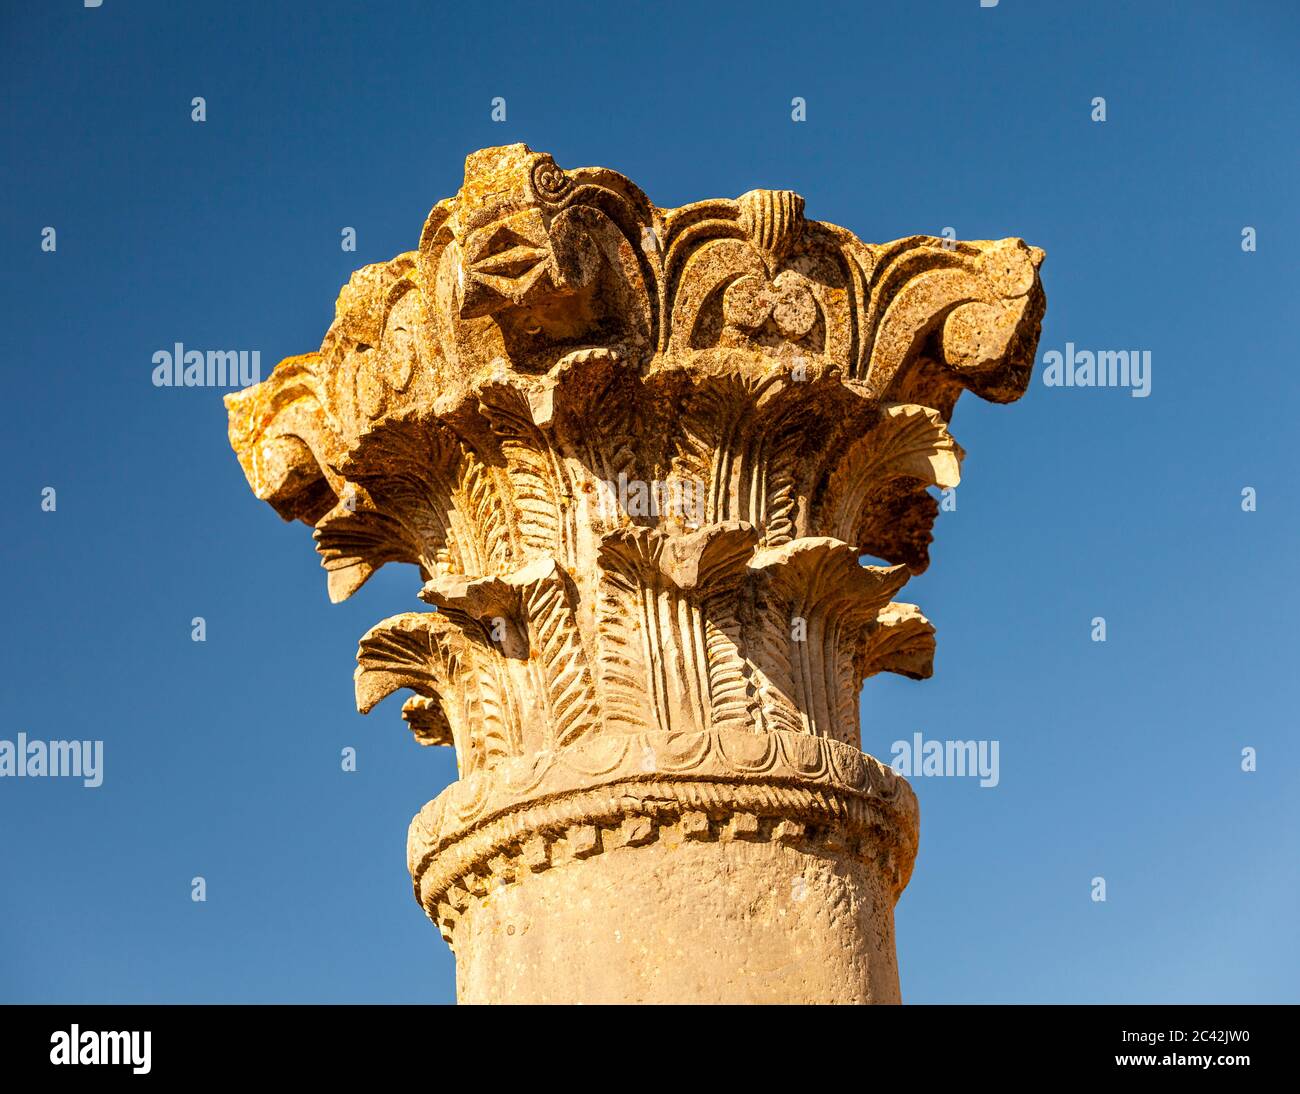 Ancient Roman ruined city of Volubilis, Meknès-El Menzeh, Morocco Stock Photo